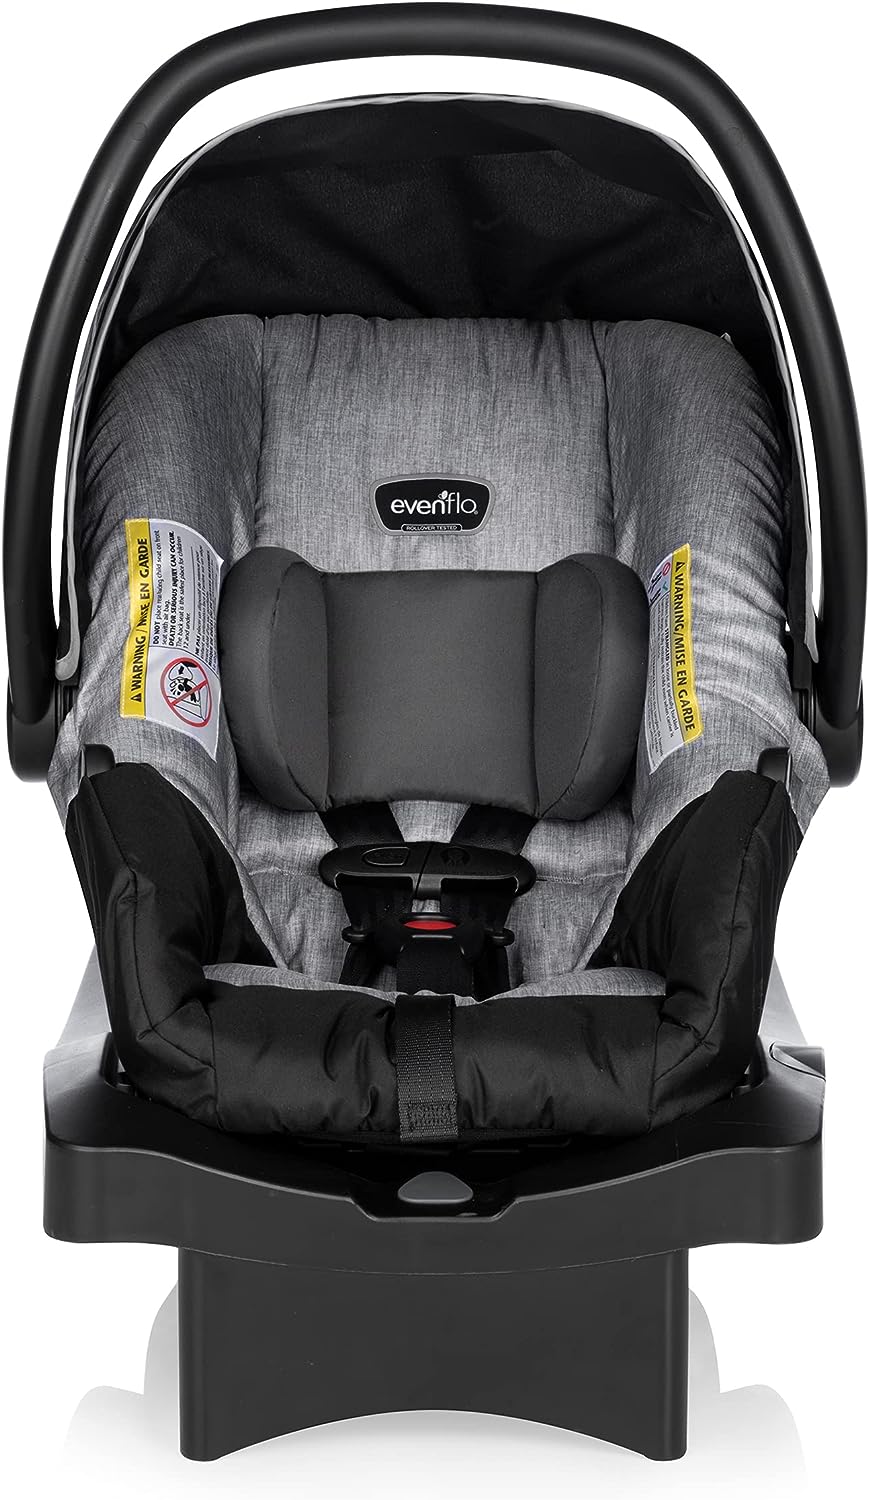 Evenflo Litemax Sport Infant Car Seat (Graphite)